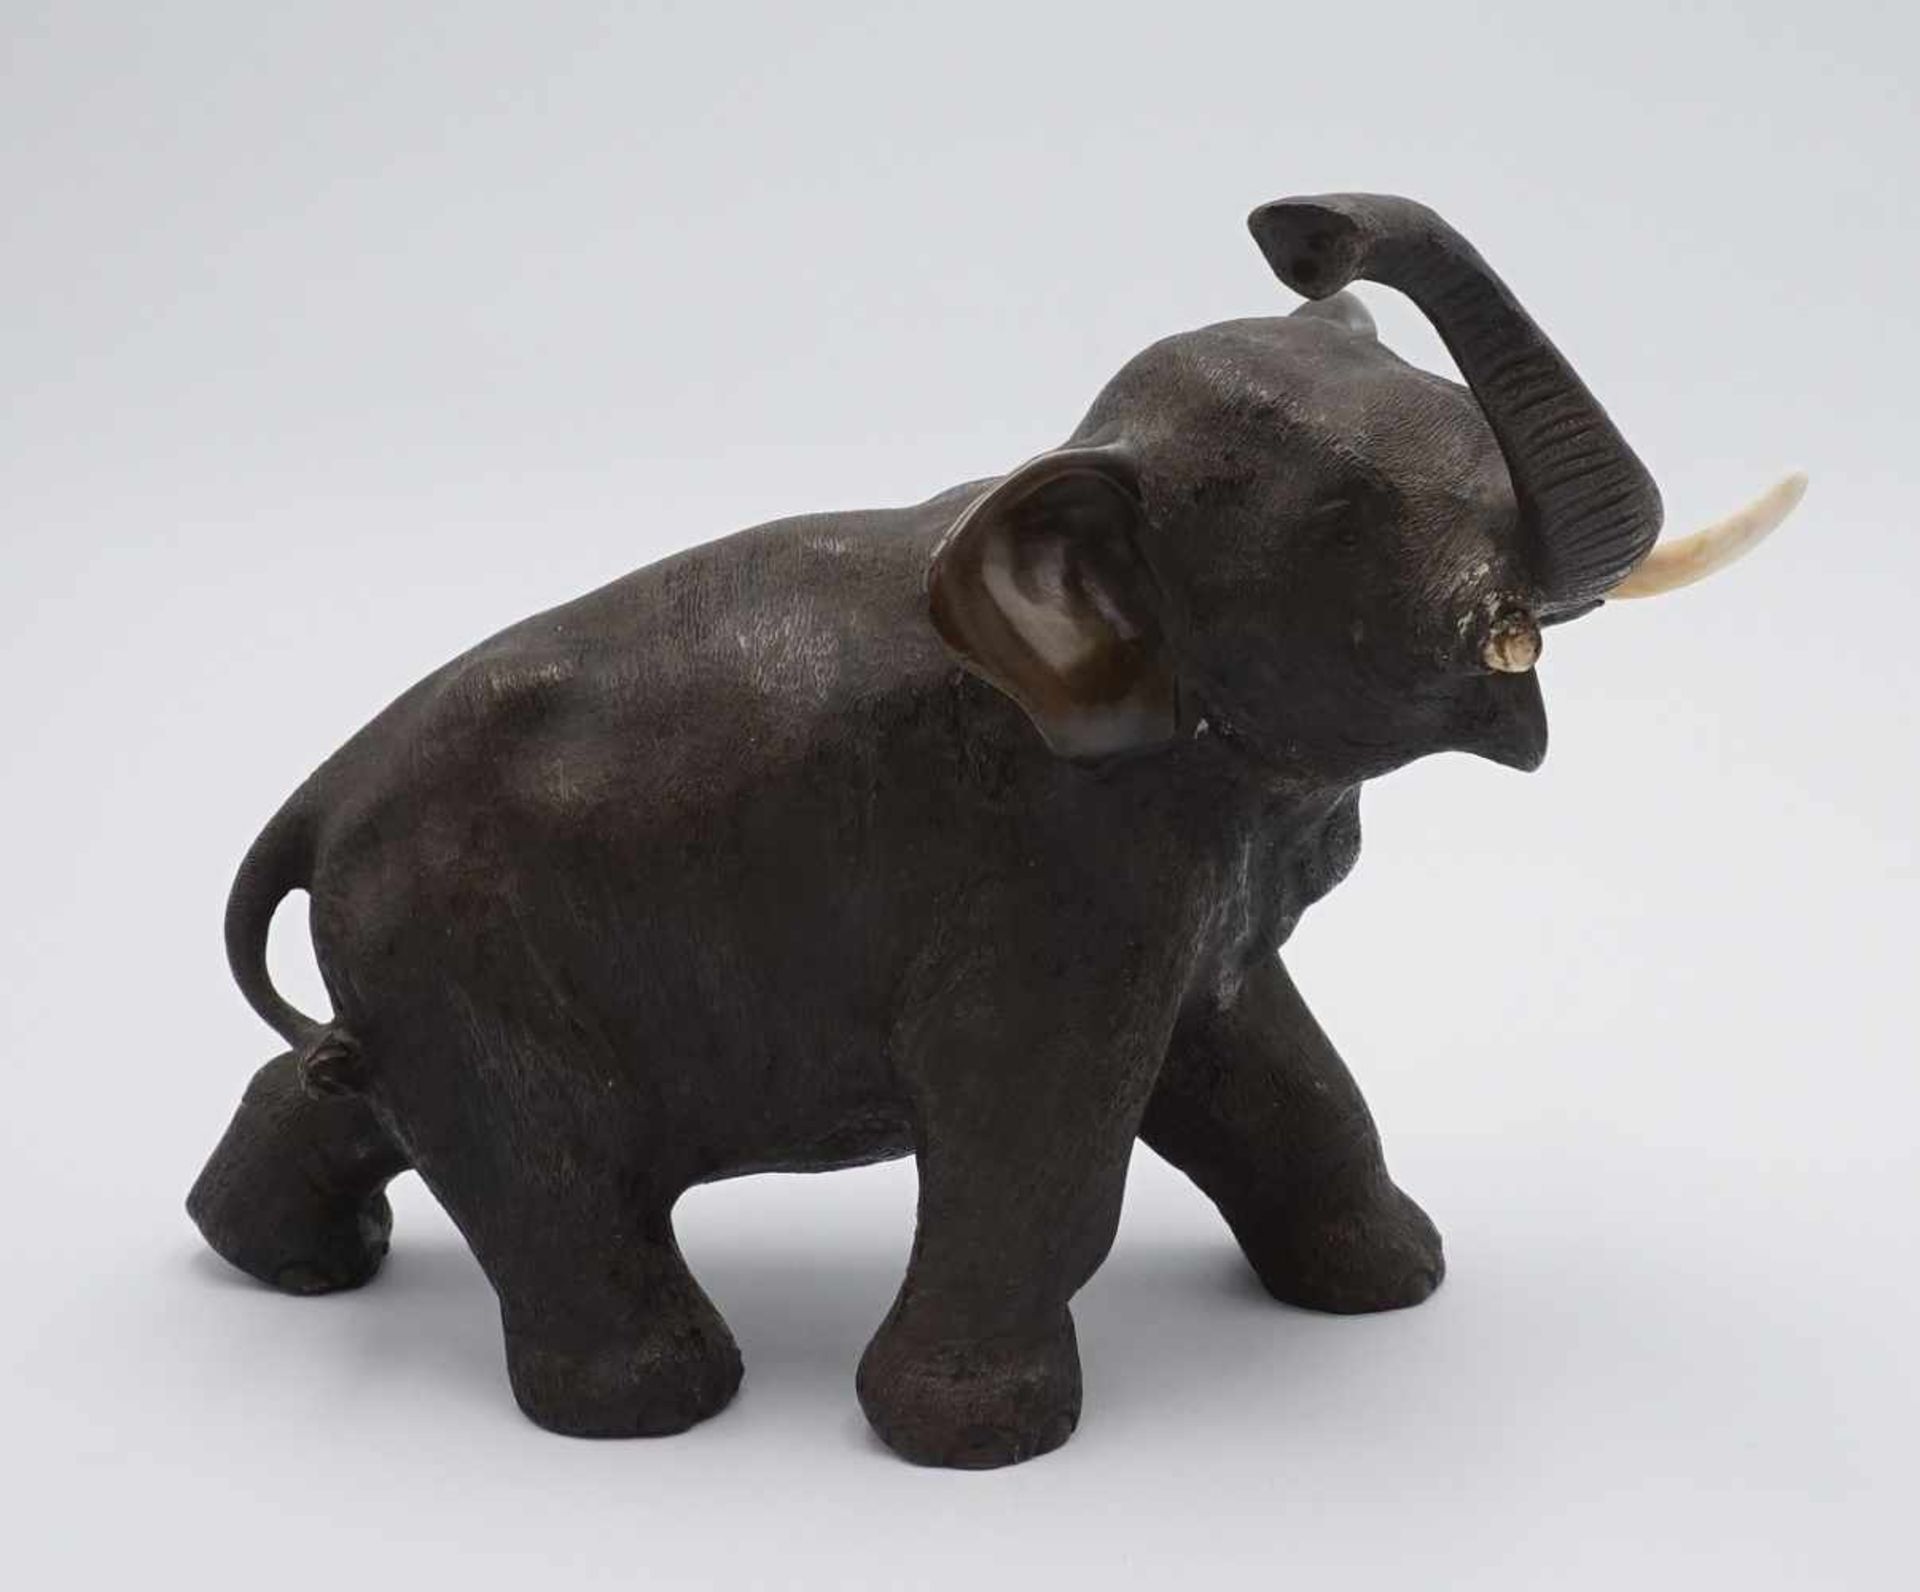 Elefant, Japan, Meiji-Periode, um 1900Bronze, Elefant mit erhobenem Rüssel, sehr detaillierte